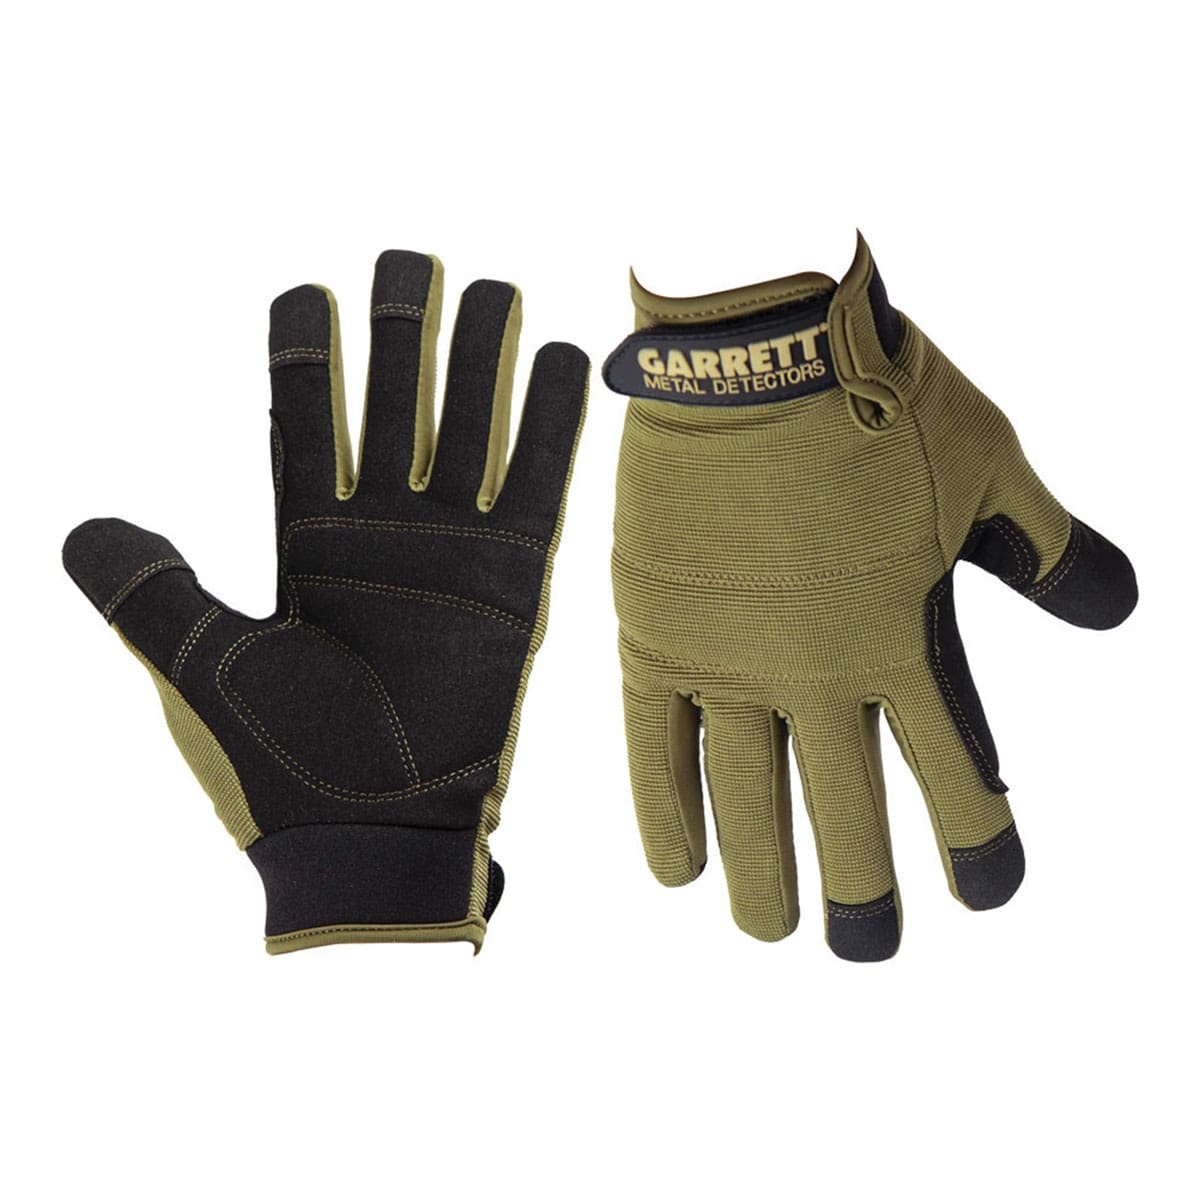 Garrett Detecting Gloves XL